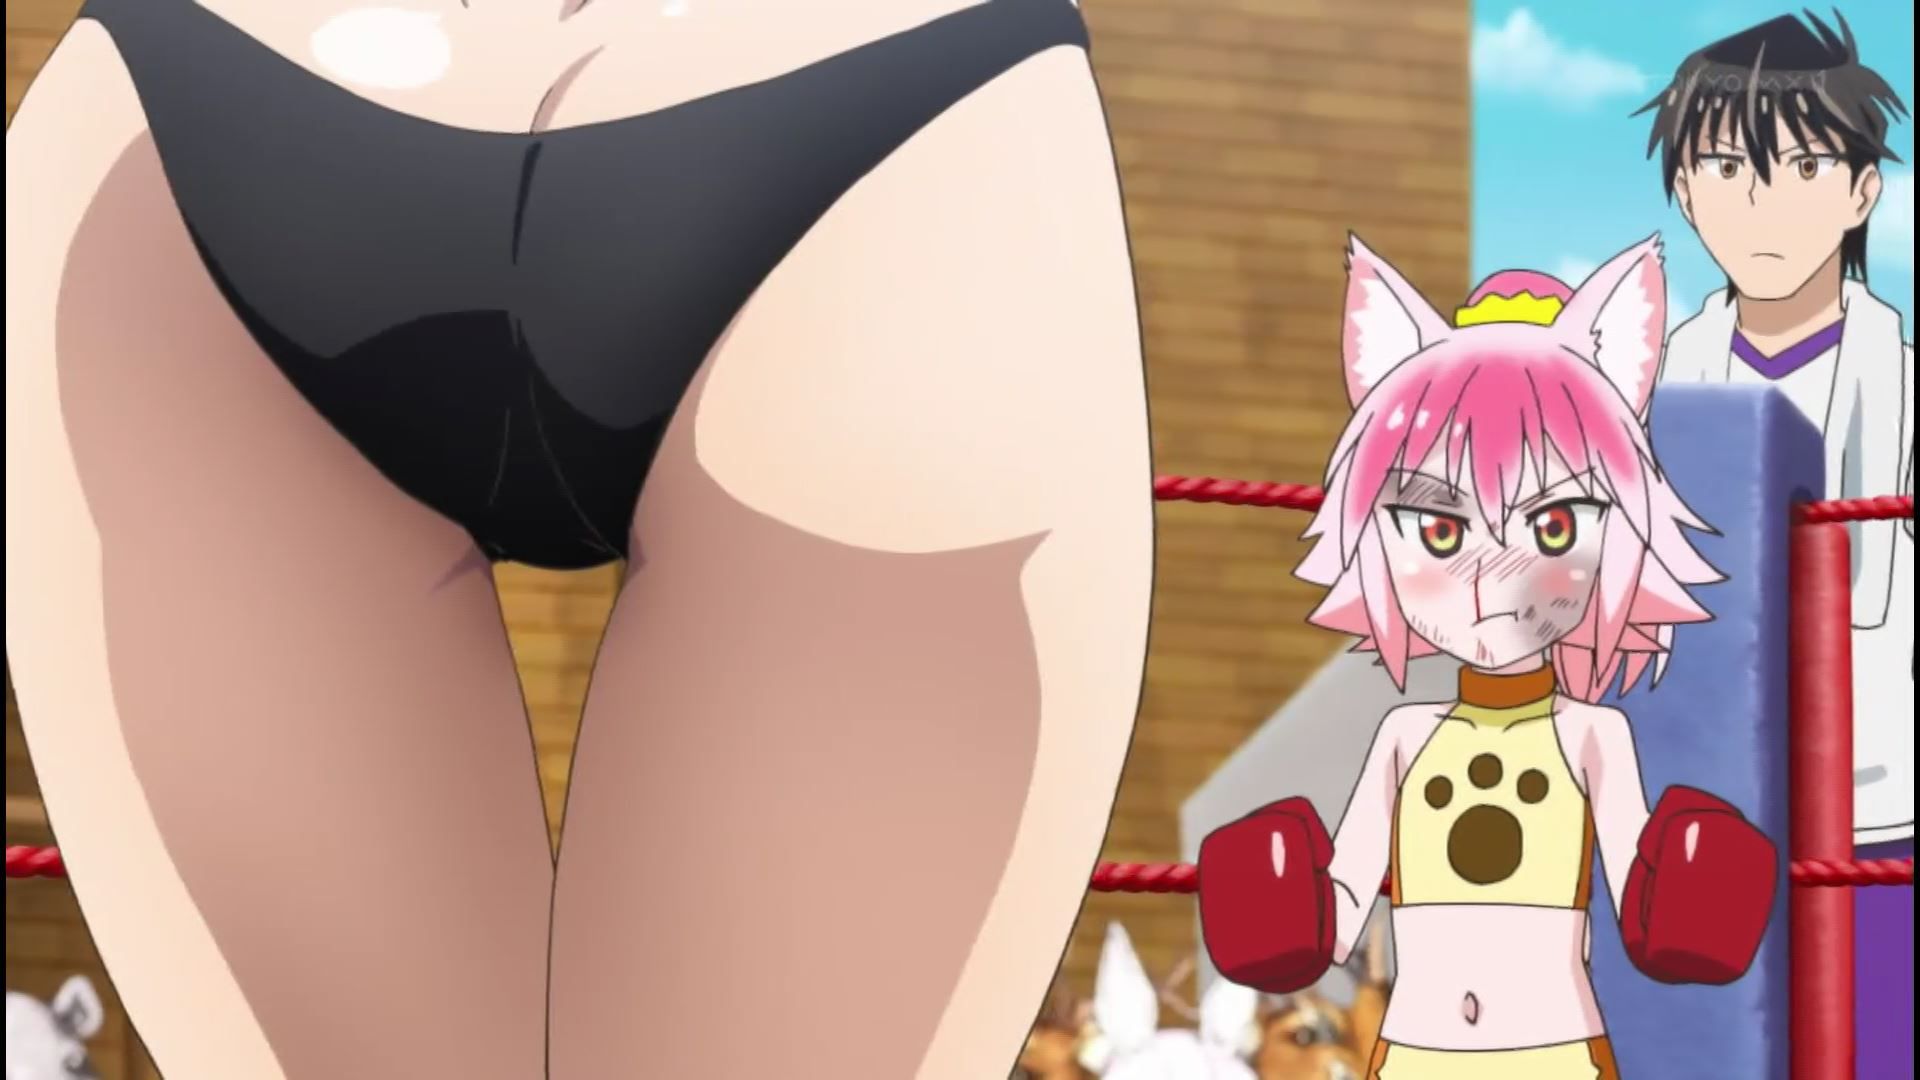 Anime [Shimarenuse] Seaton Gakuen] scene that girls become insanely erotic costumes in episode 12 22